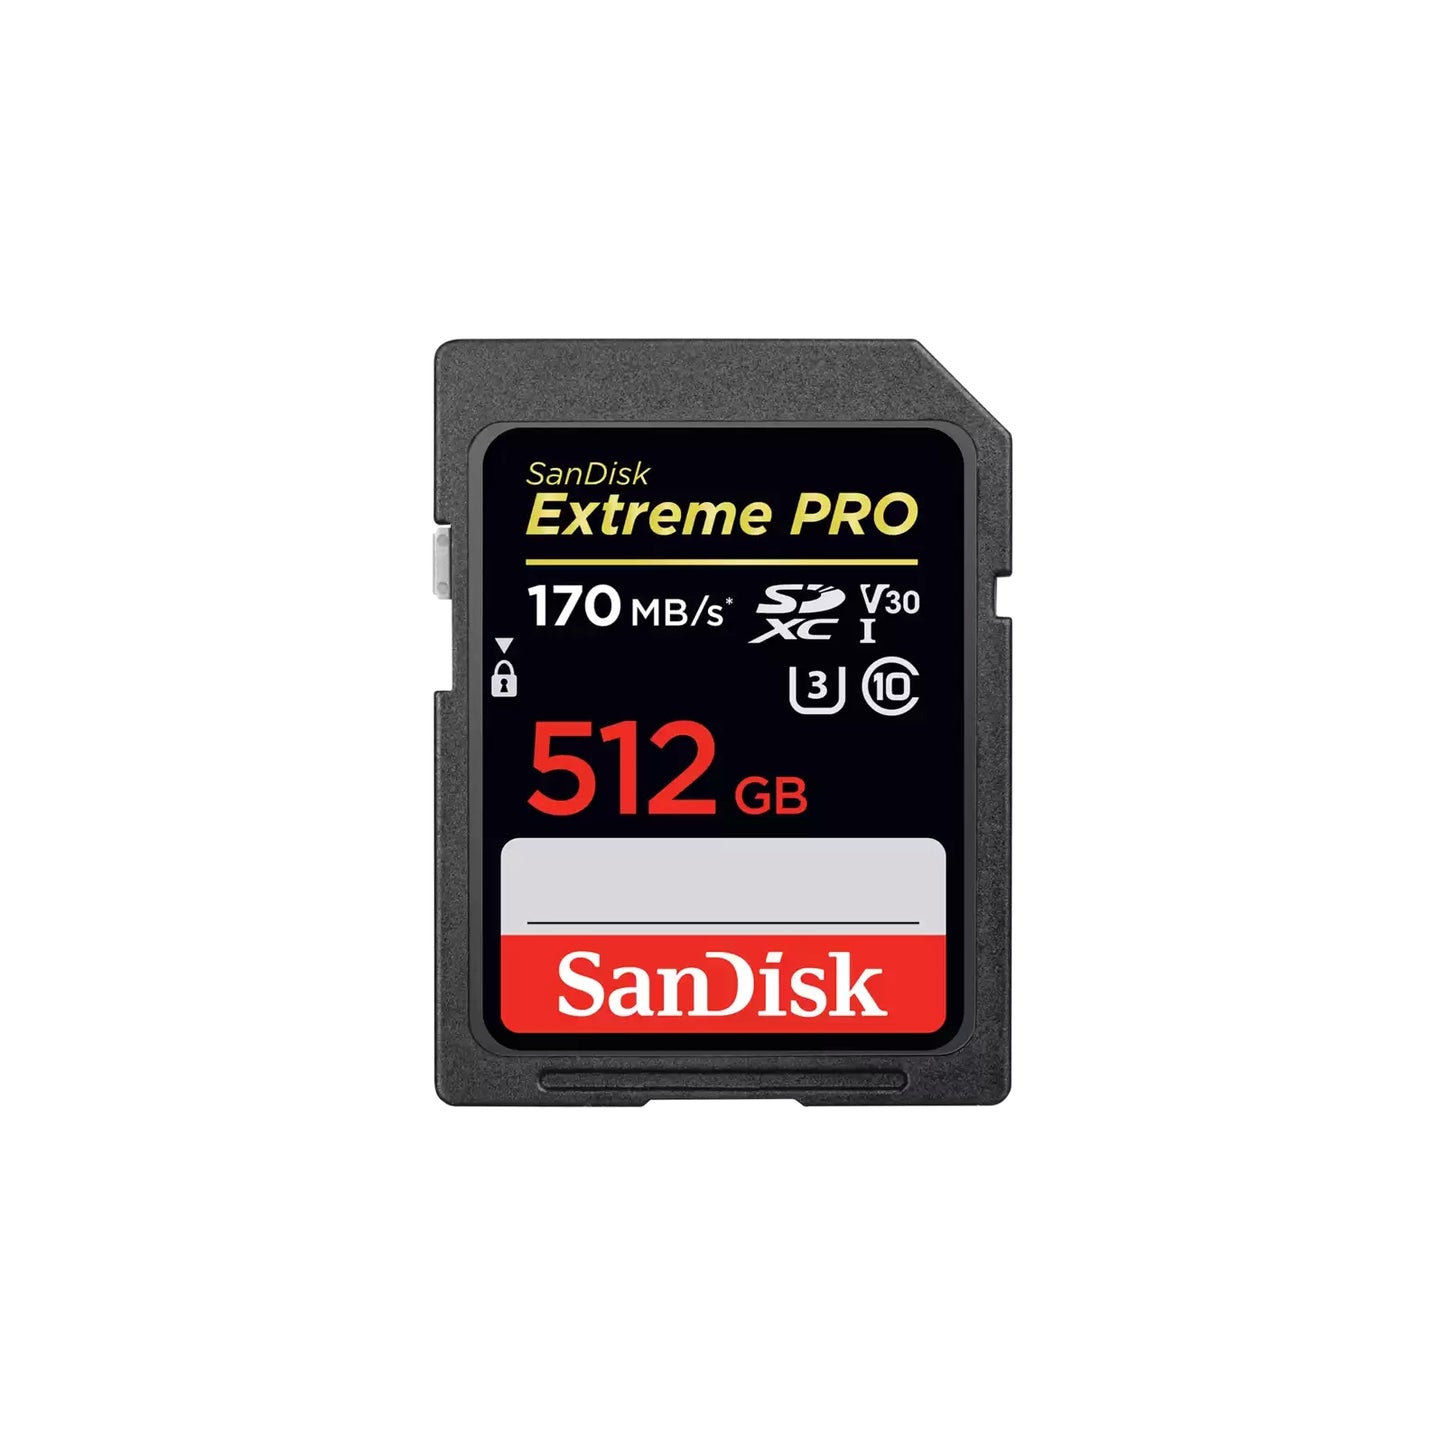 SanDisk Extreme Pro 512GB SDXC 170MB/S SD Camera Memory TF Card DSLR 4K UHD